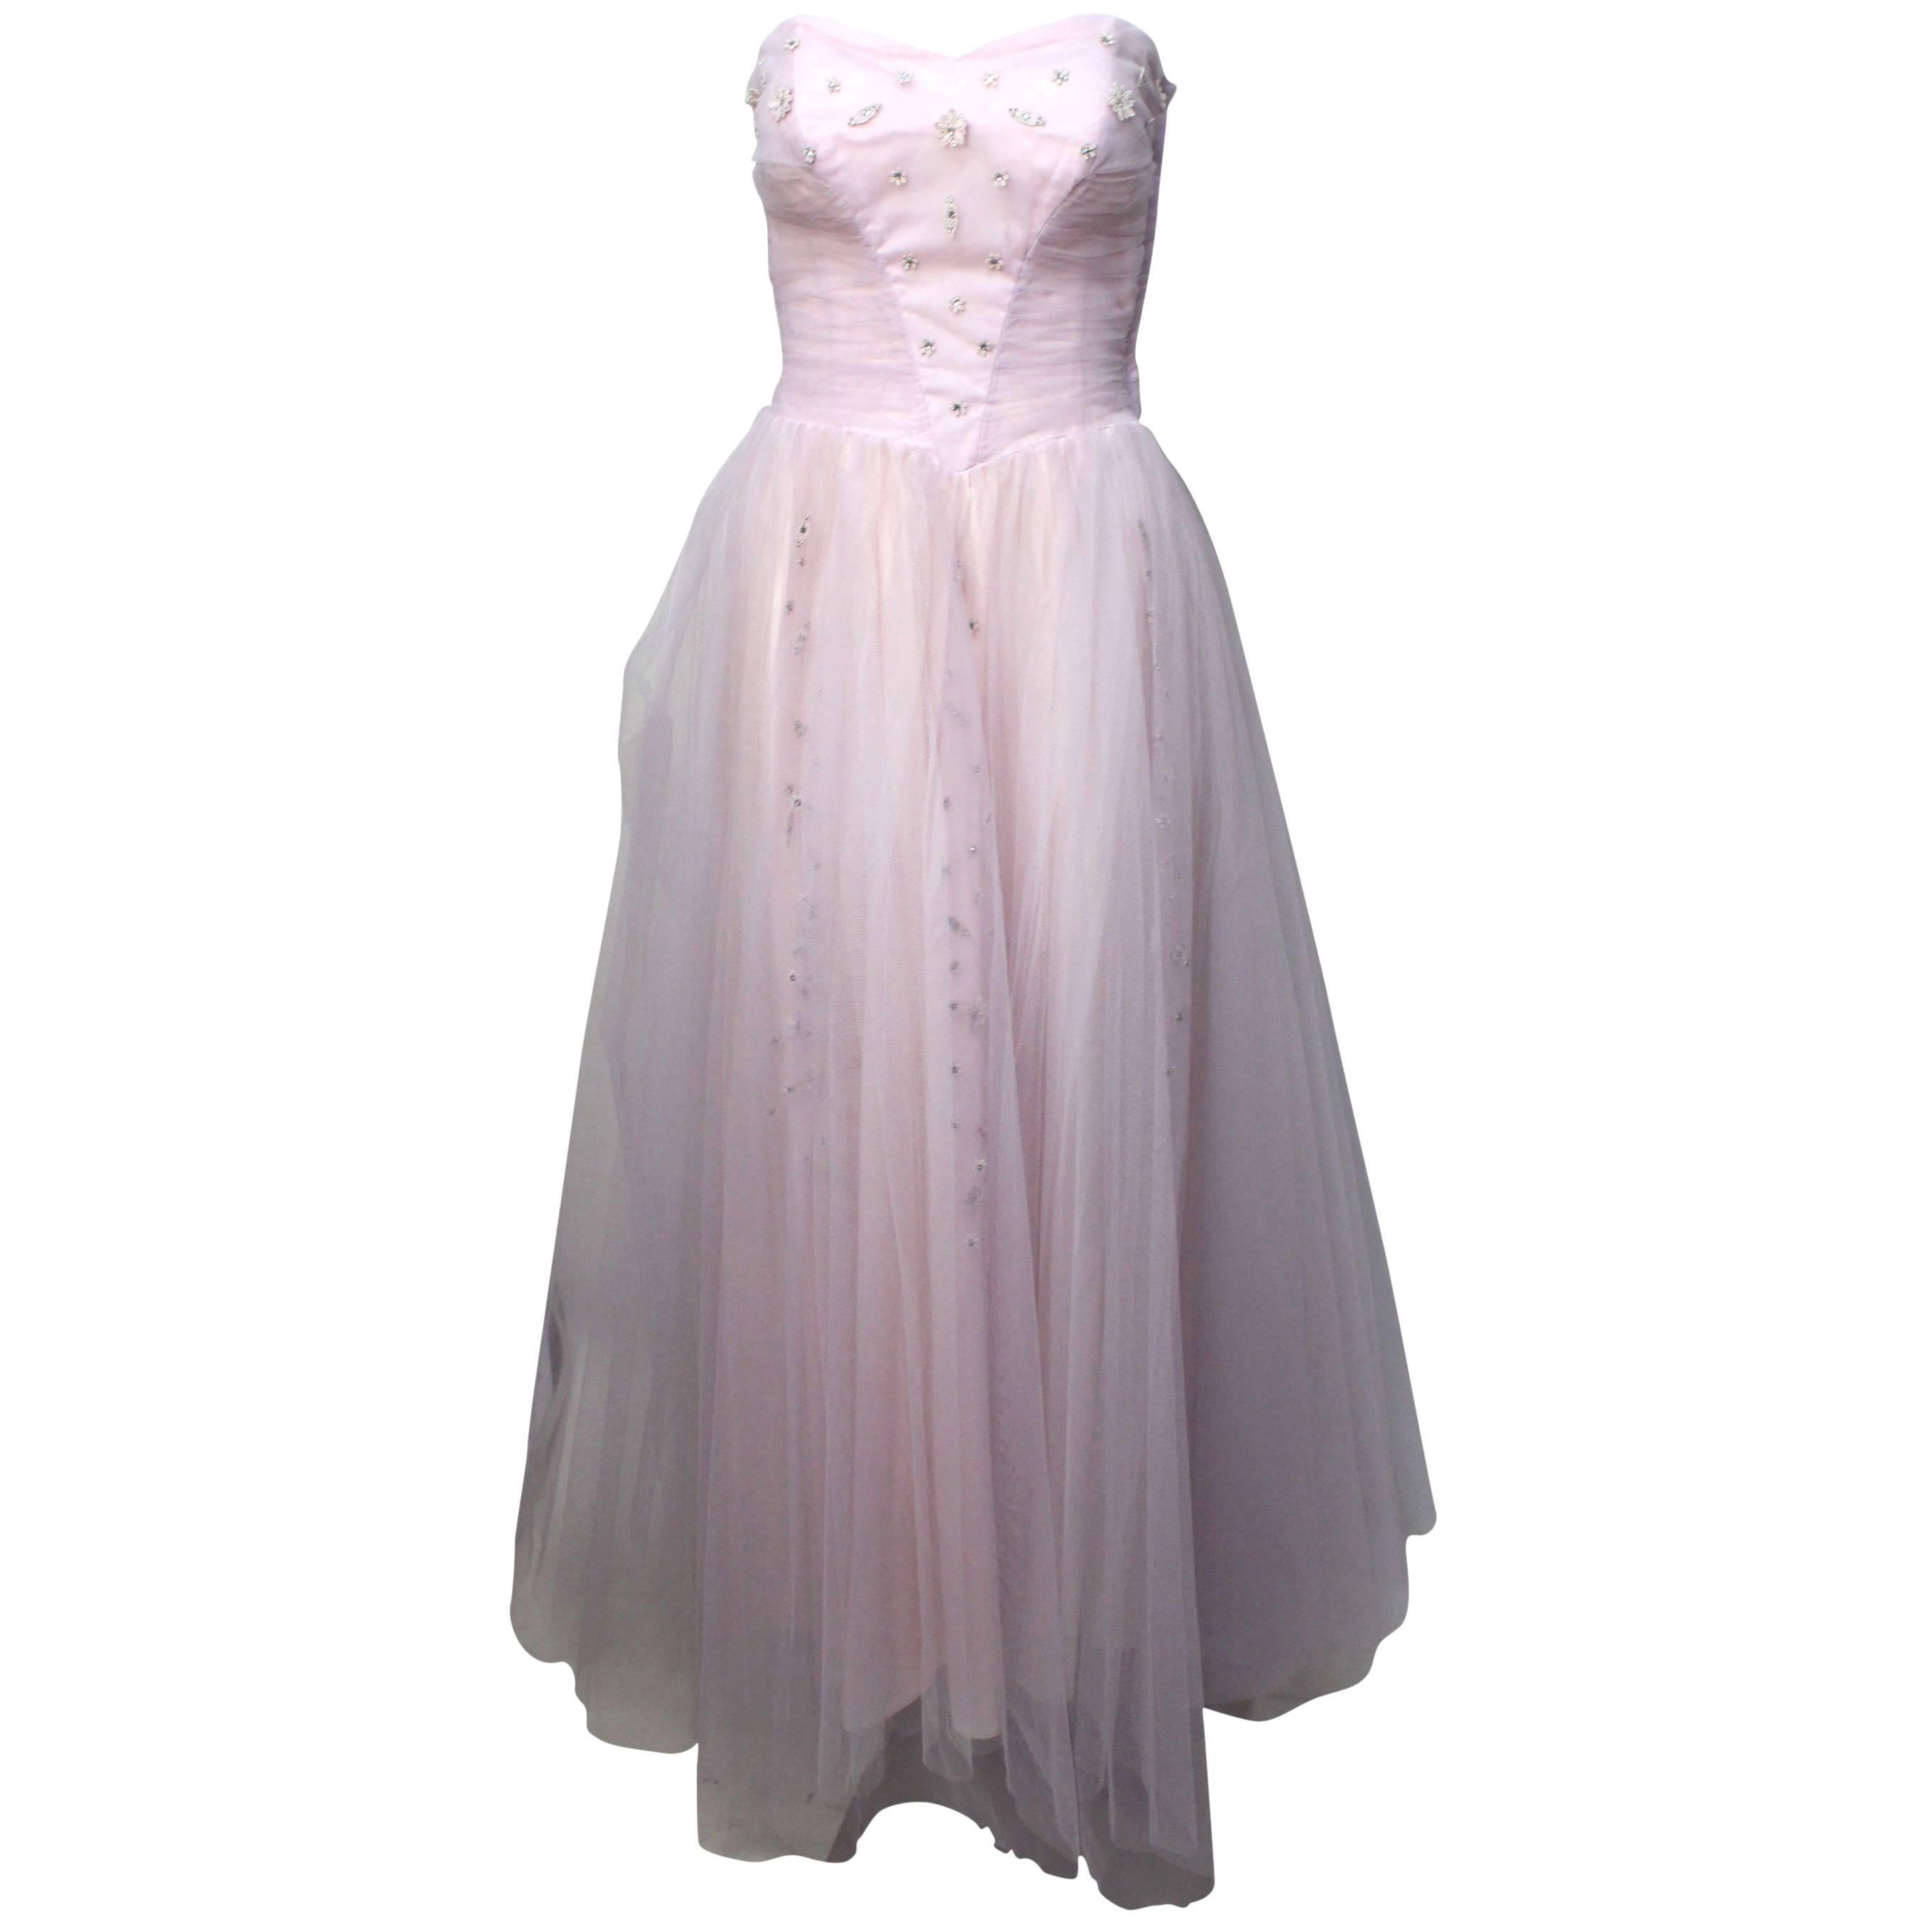 Exquisite 1950's Tulle Evening/Prom Dress